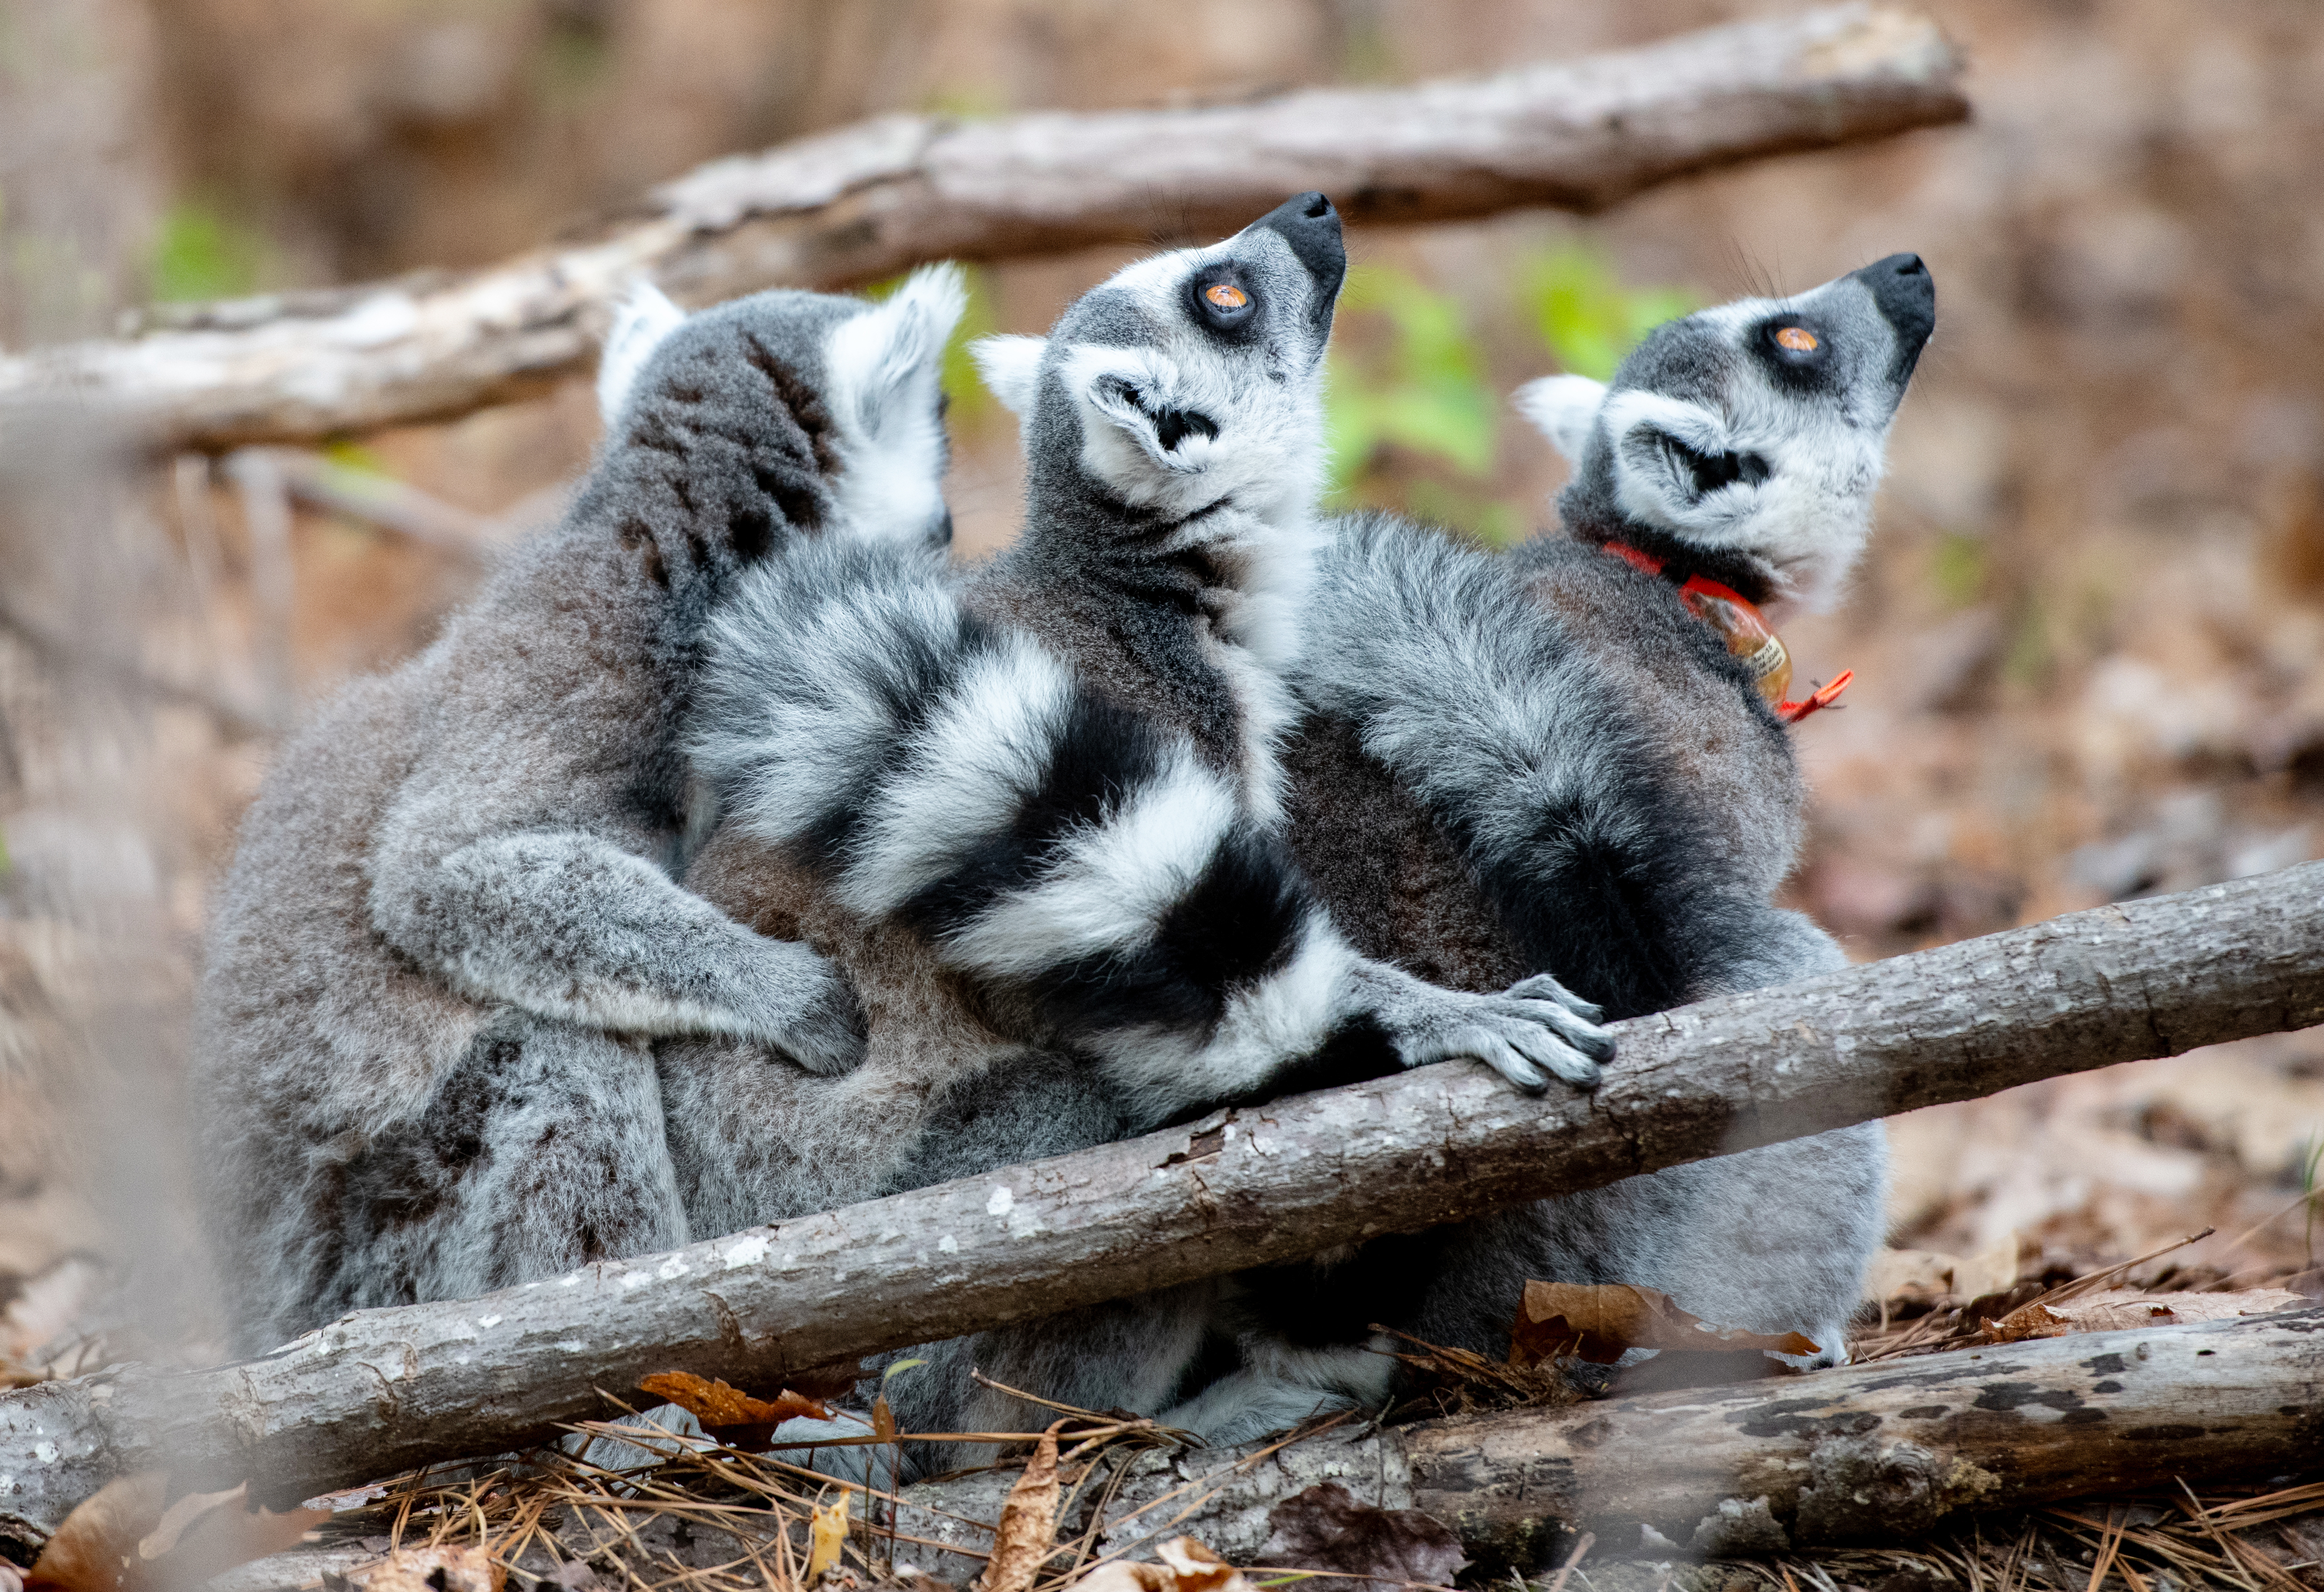 The Land of Lemurs photography by Tamara Lackey using Nikon Cameras